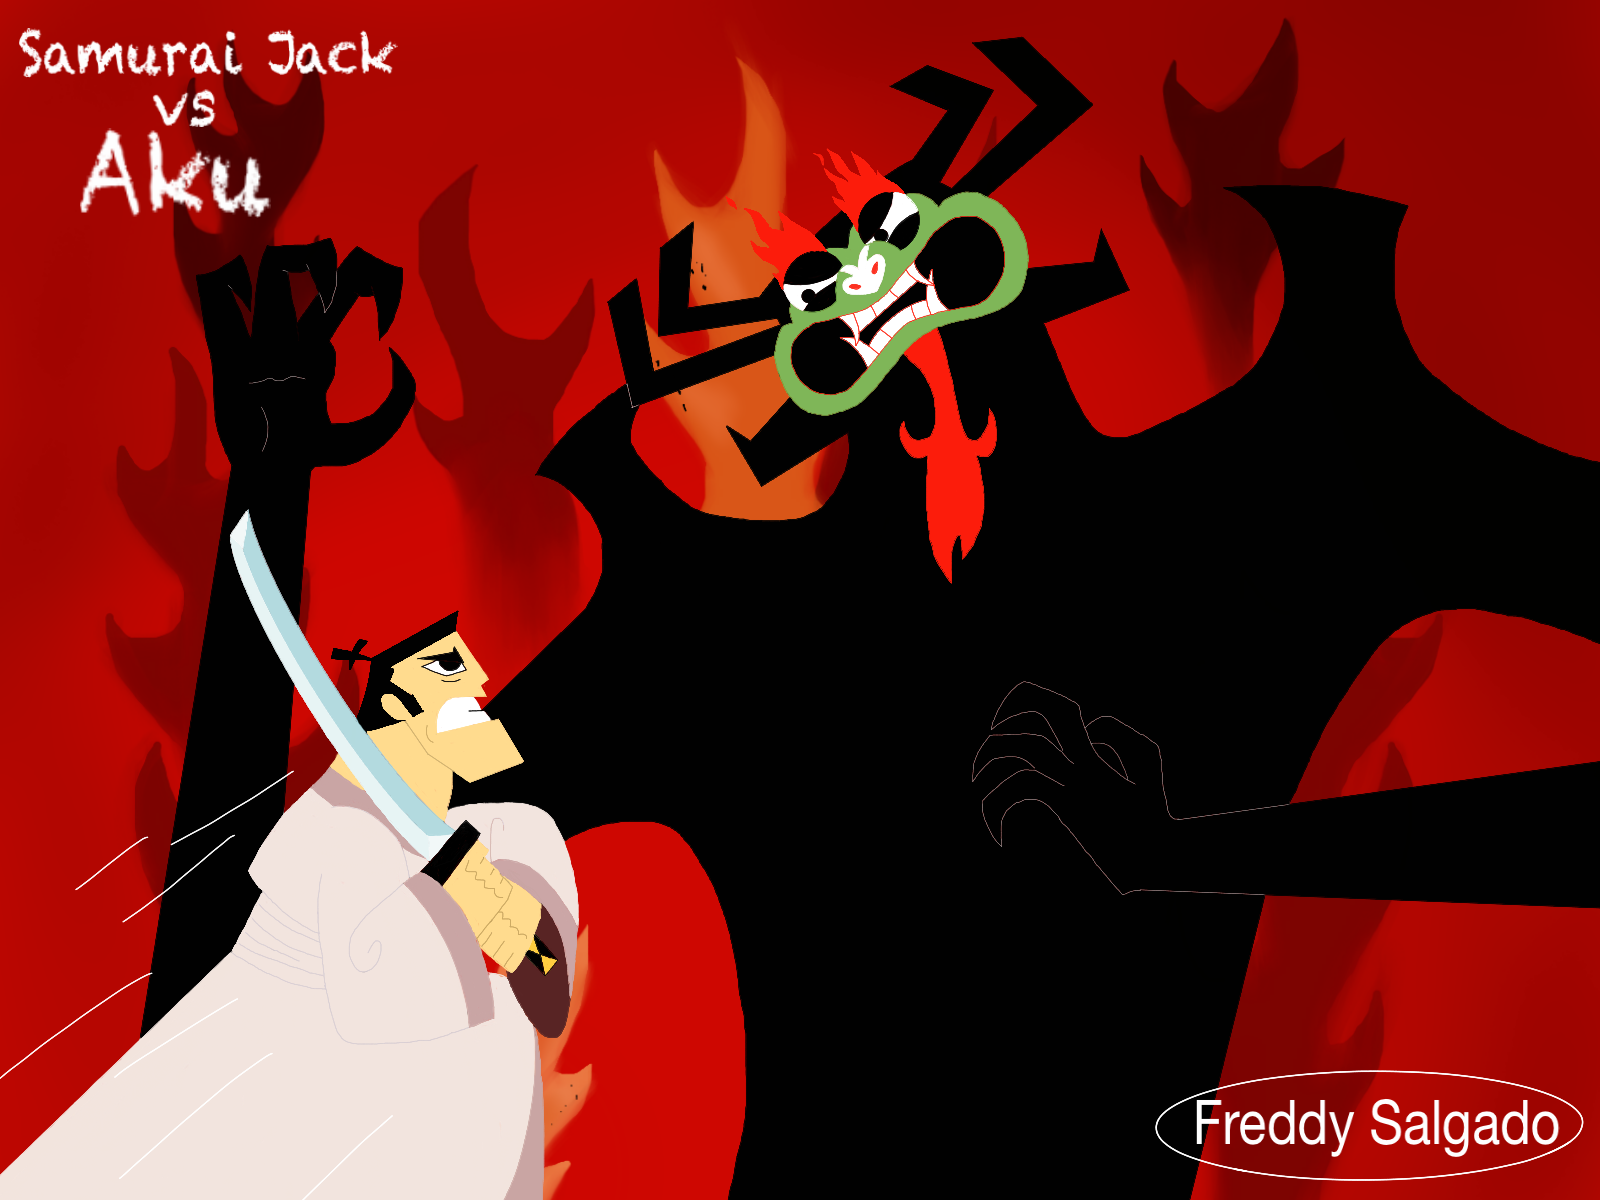 Samurai Jack vs Aku by Freddygbaf on DeviantArt